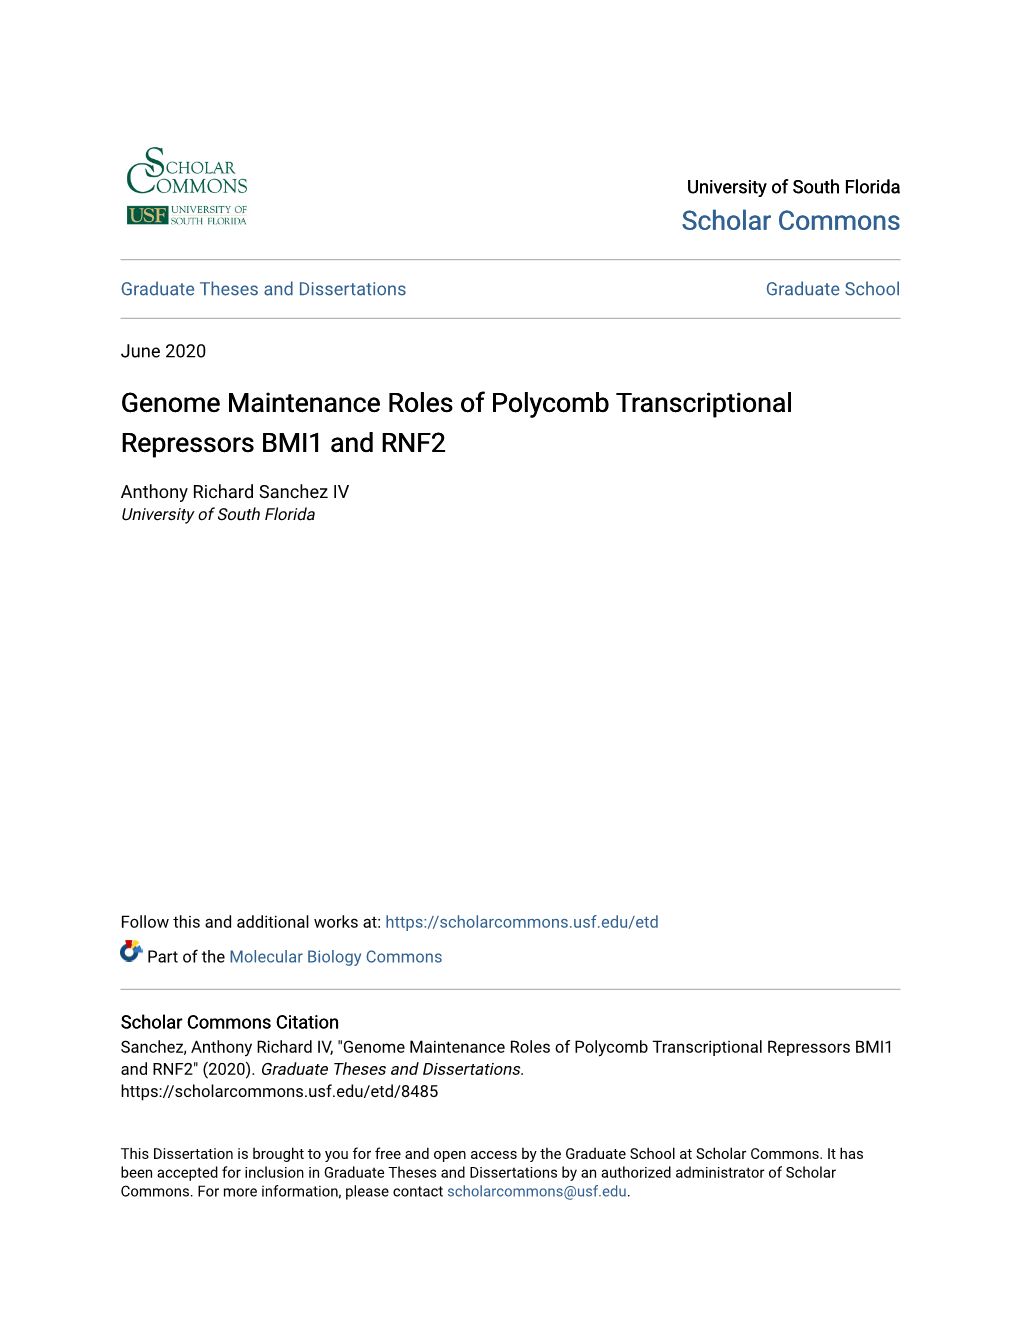 Genome Maintenance Roles of Polycomb Transcriptional Repressors BMI1 and RNF2